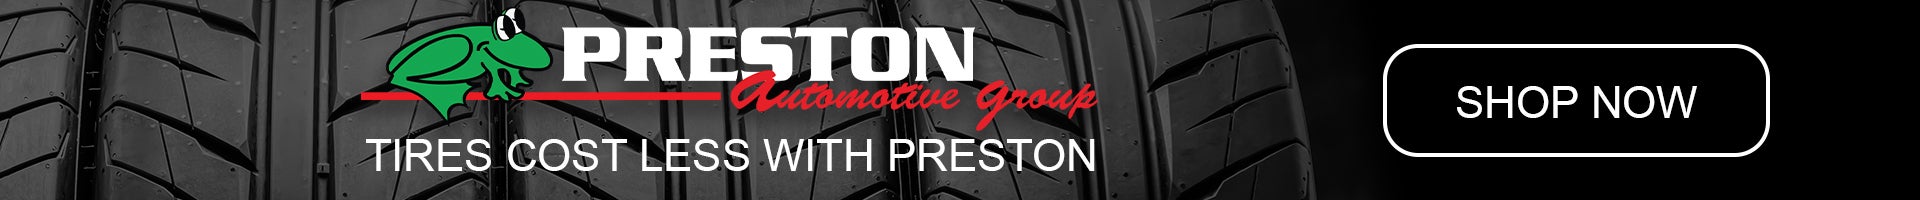 Tires cost less at Preston